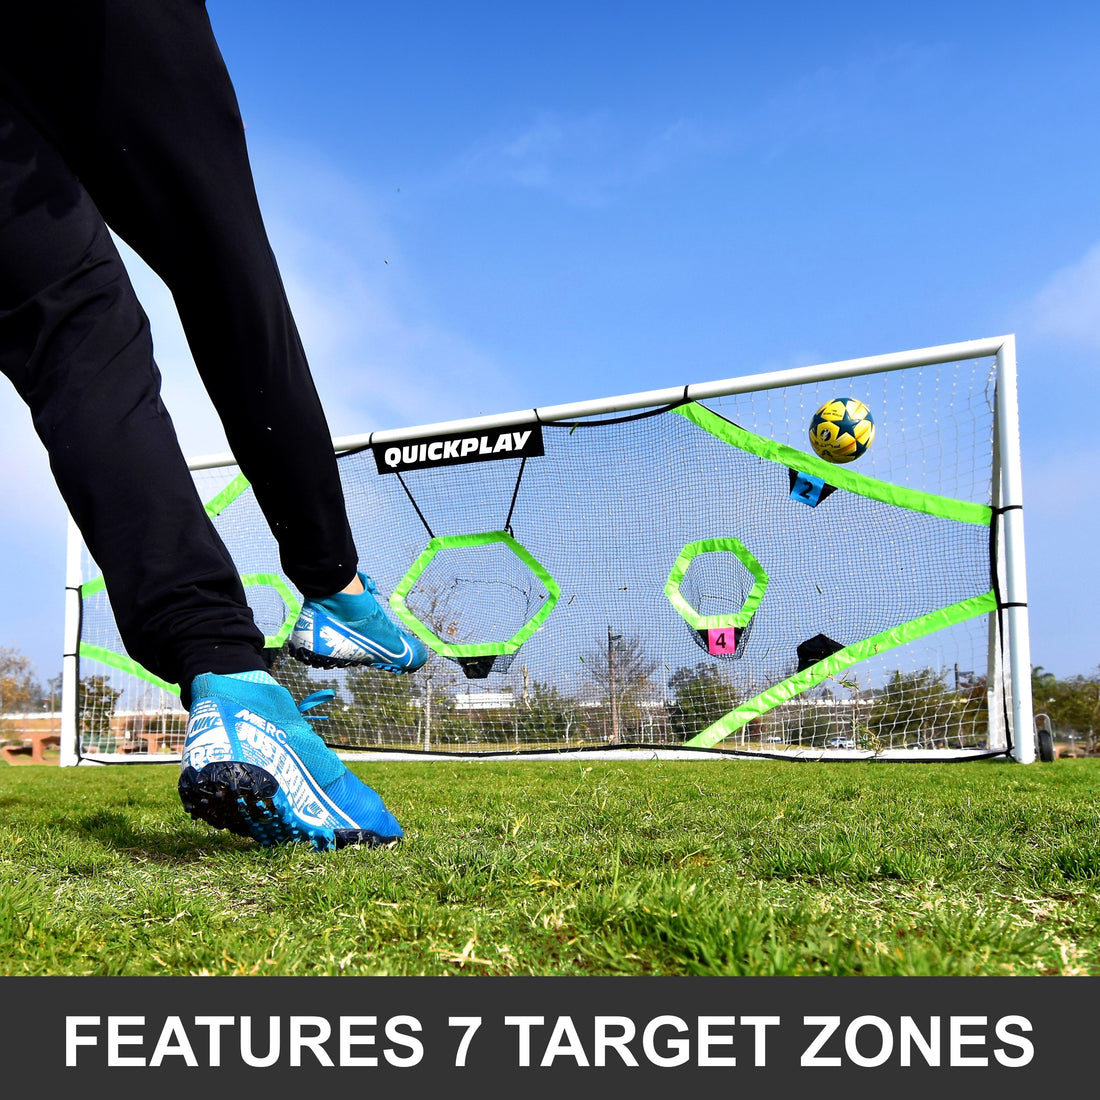 TARGET Net Pro for soccer goals 24x8' (excl. goal)